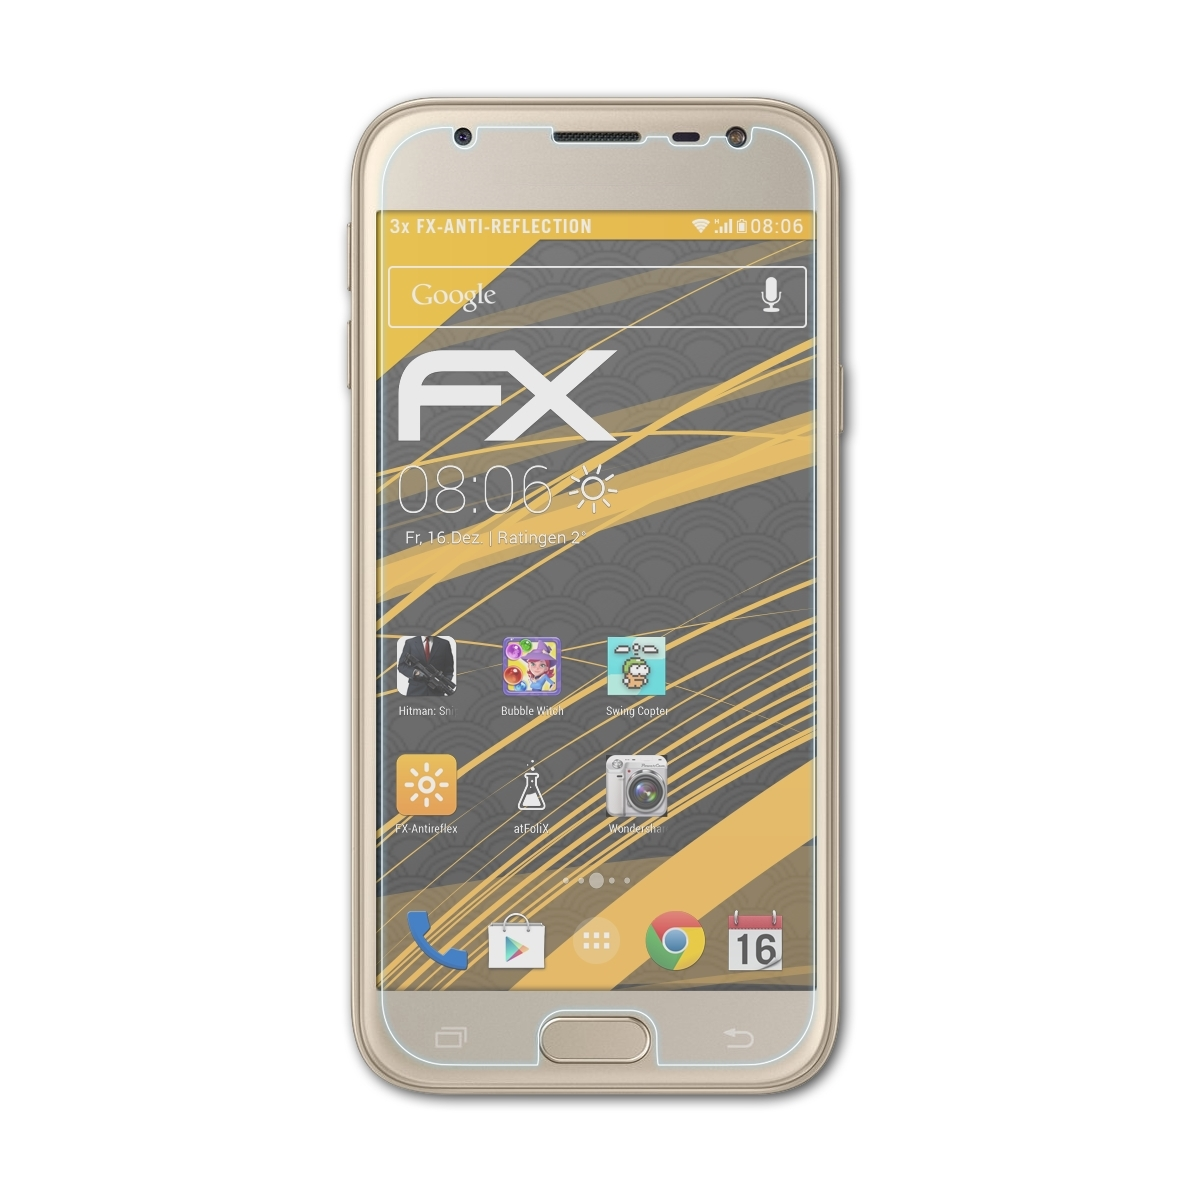 ATFOLIX 3x FX-Antireflex Displayschutz(für Samsung J3 Pro (SM-J330)) Galaxy